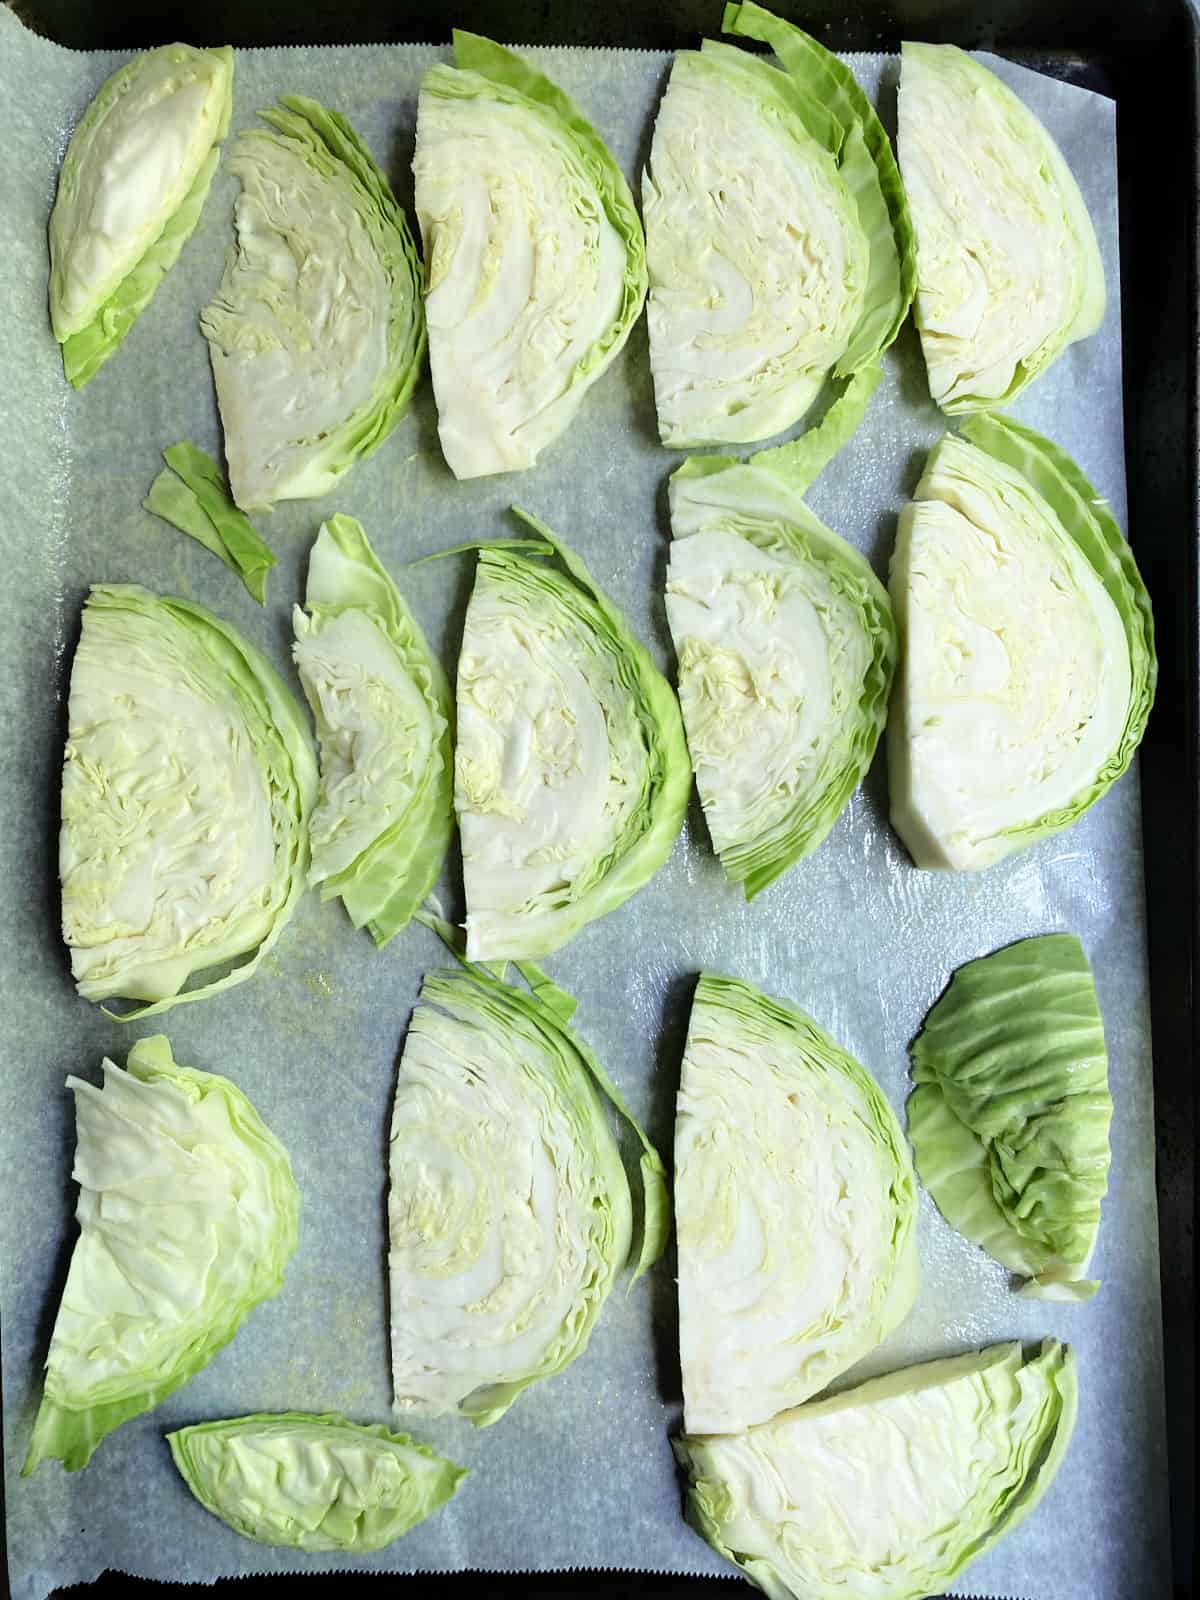 cabbage steaks on a baking sheet